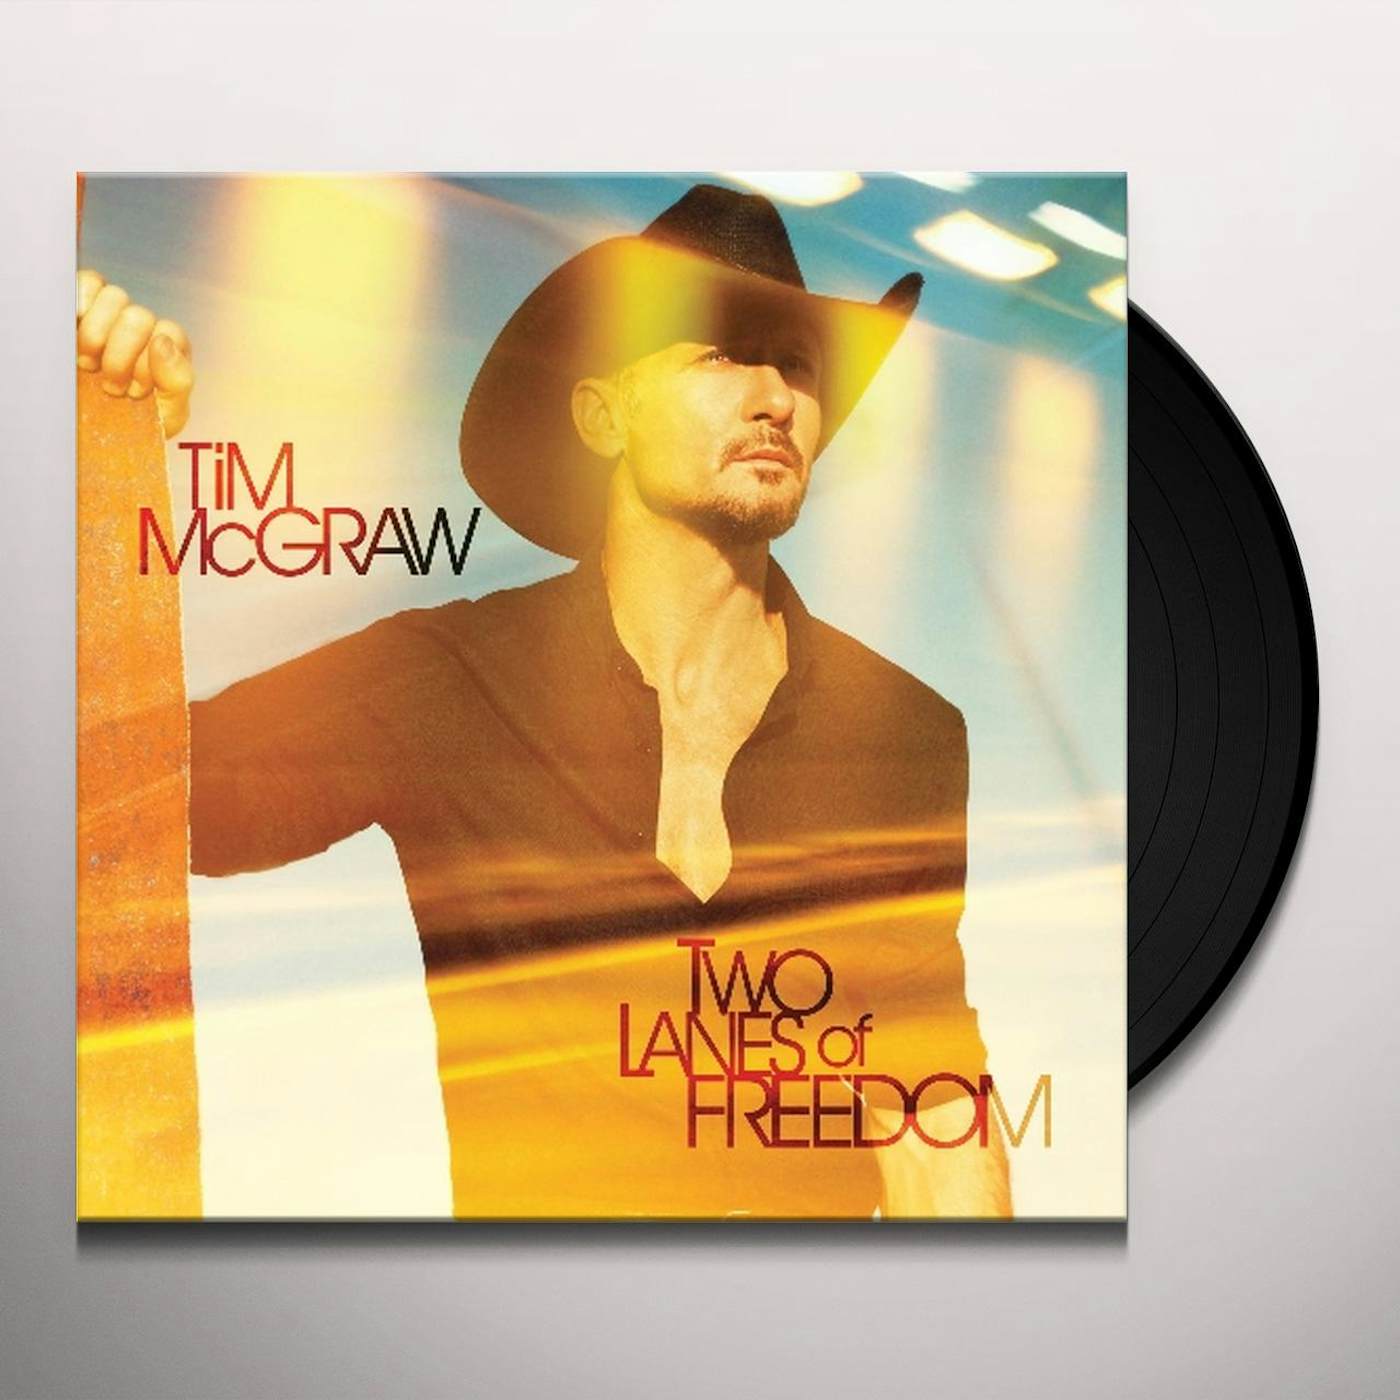 Tim McGraw Two Lanes Of Freedom Vinyl Record